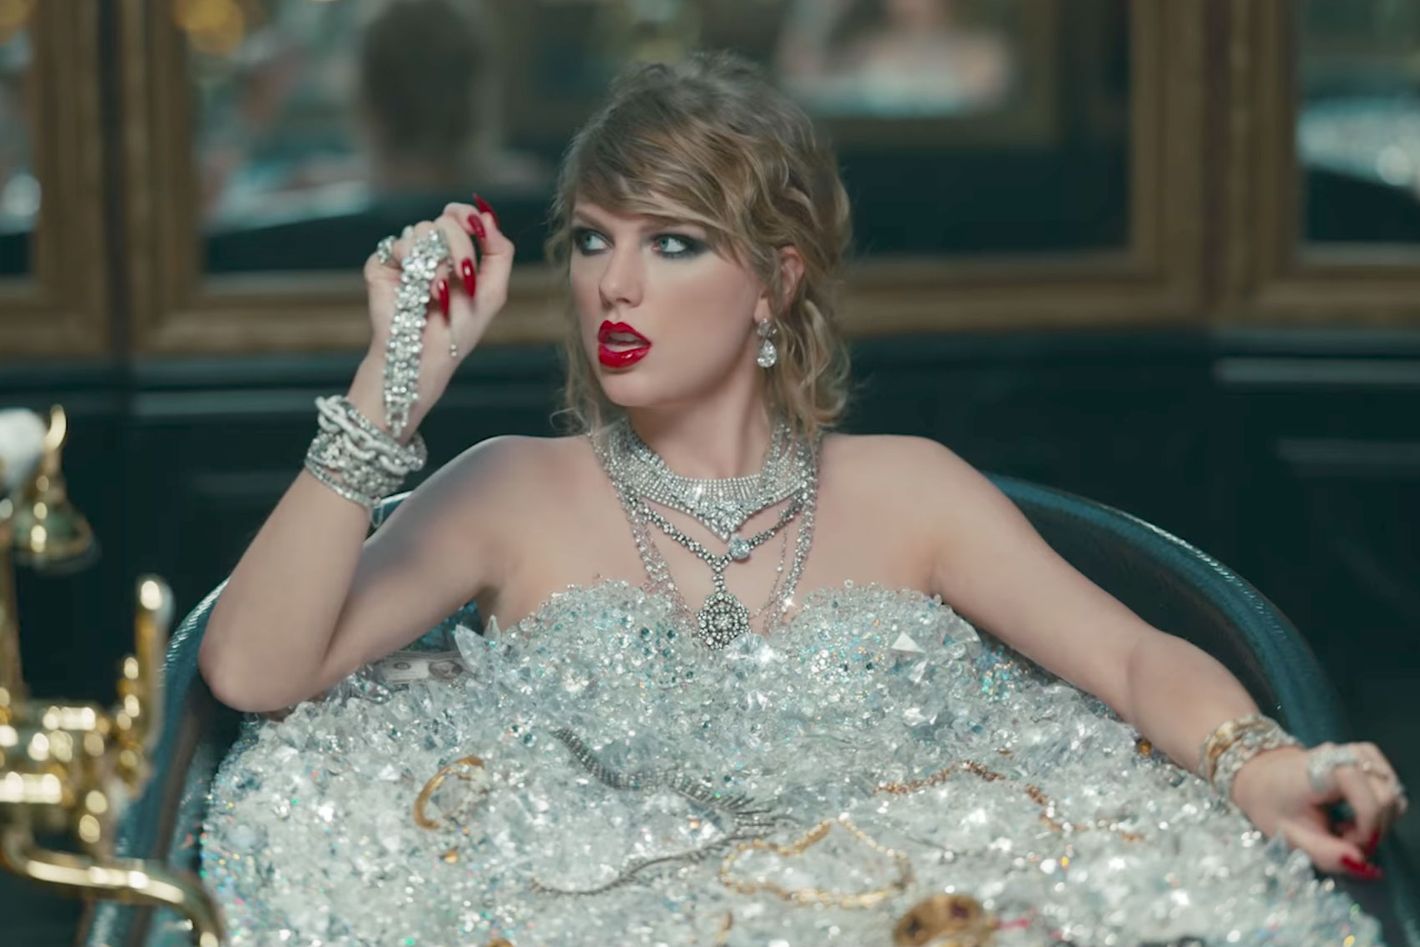 Xxx Outdoor Call Girl Com - Taylor Swift's New Song Is a Pure Piece of Trump-Era Pop Art